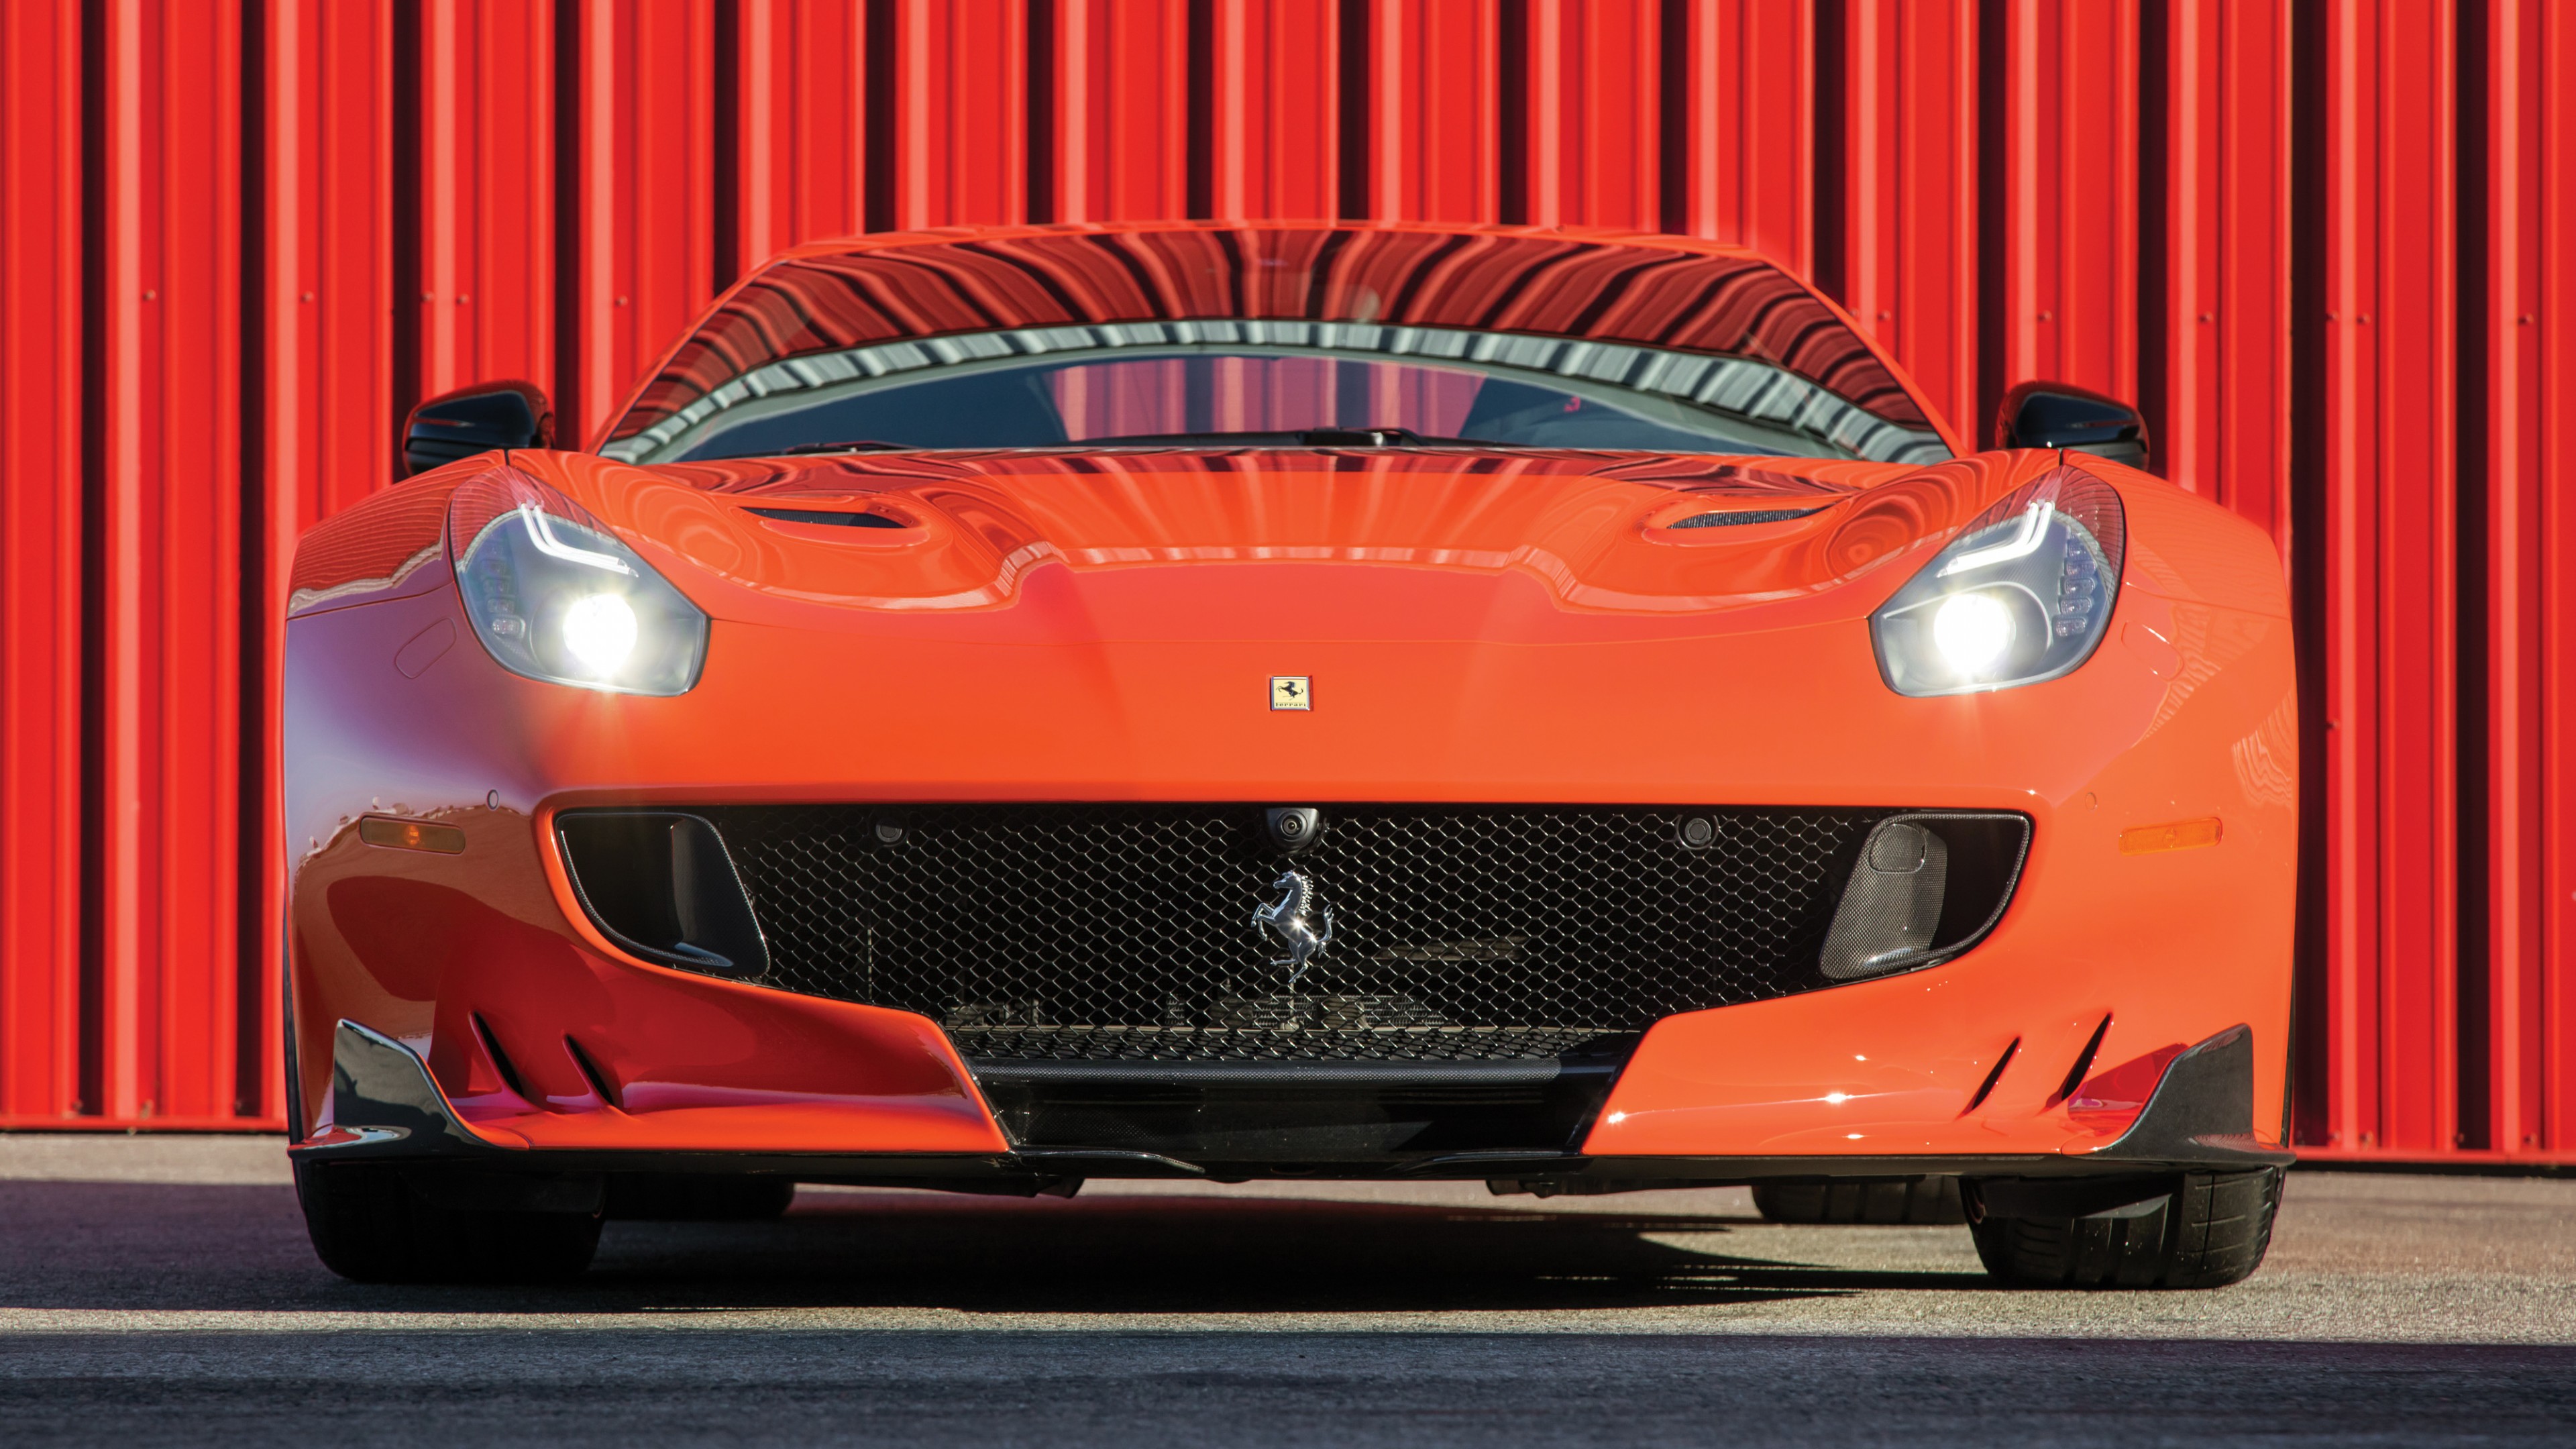 Ferrari F12tdf interior specifications